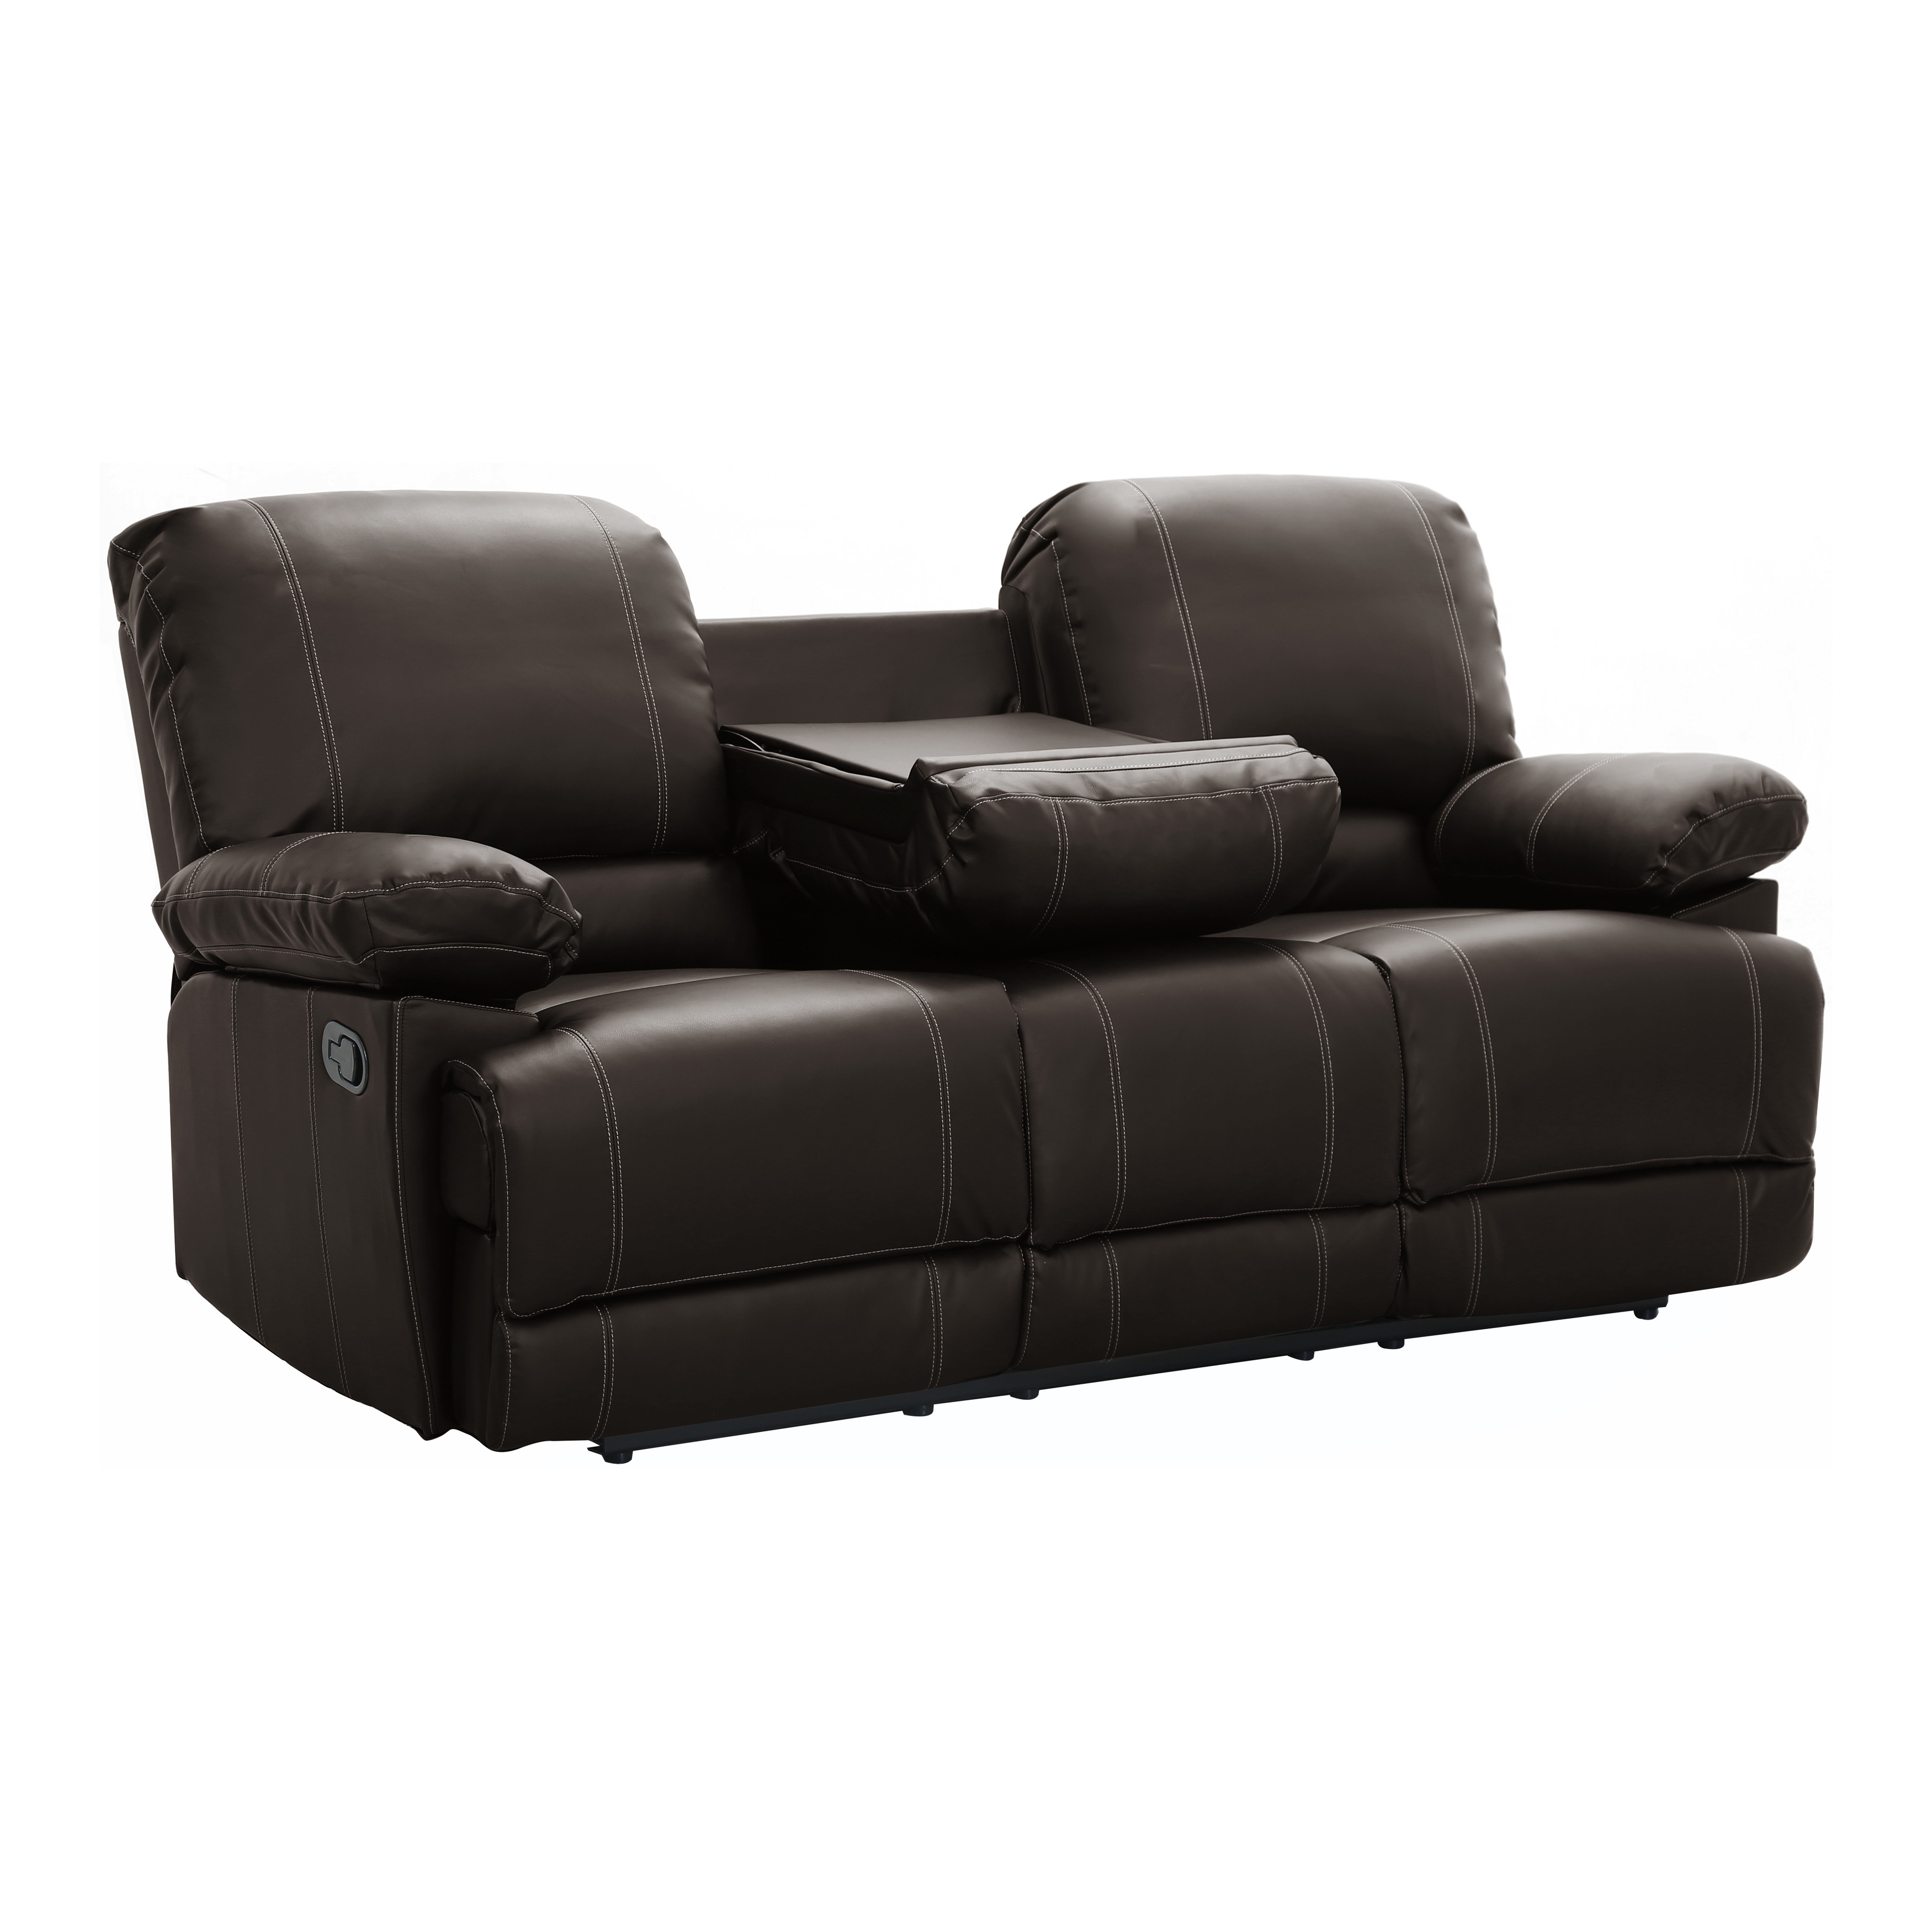 https://www.momjunction.com/wp-content/uploads/product-images/homelegance-center-hill-bonded-leather-reclining-love-seat_afl777.jpg